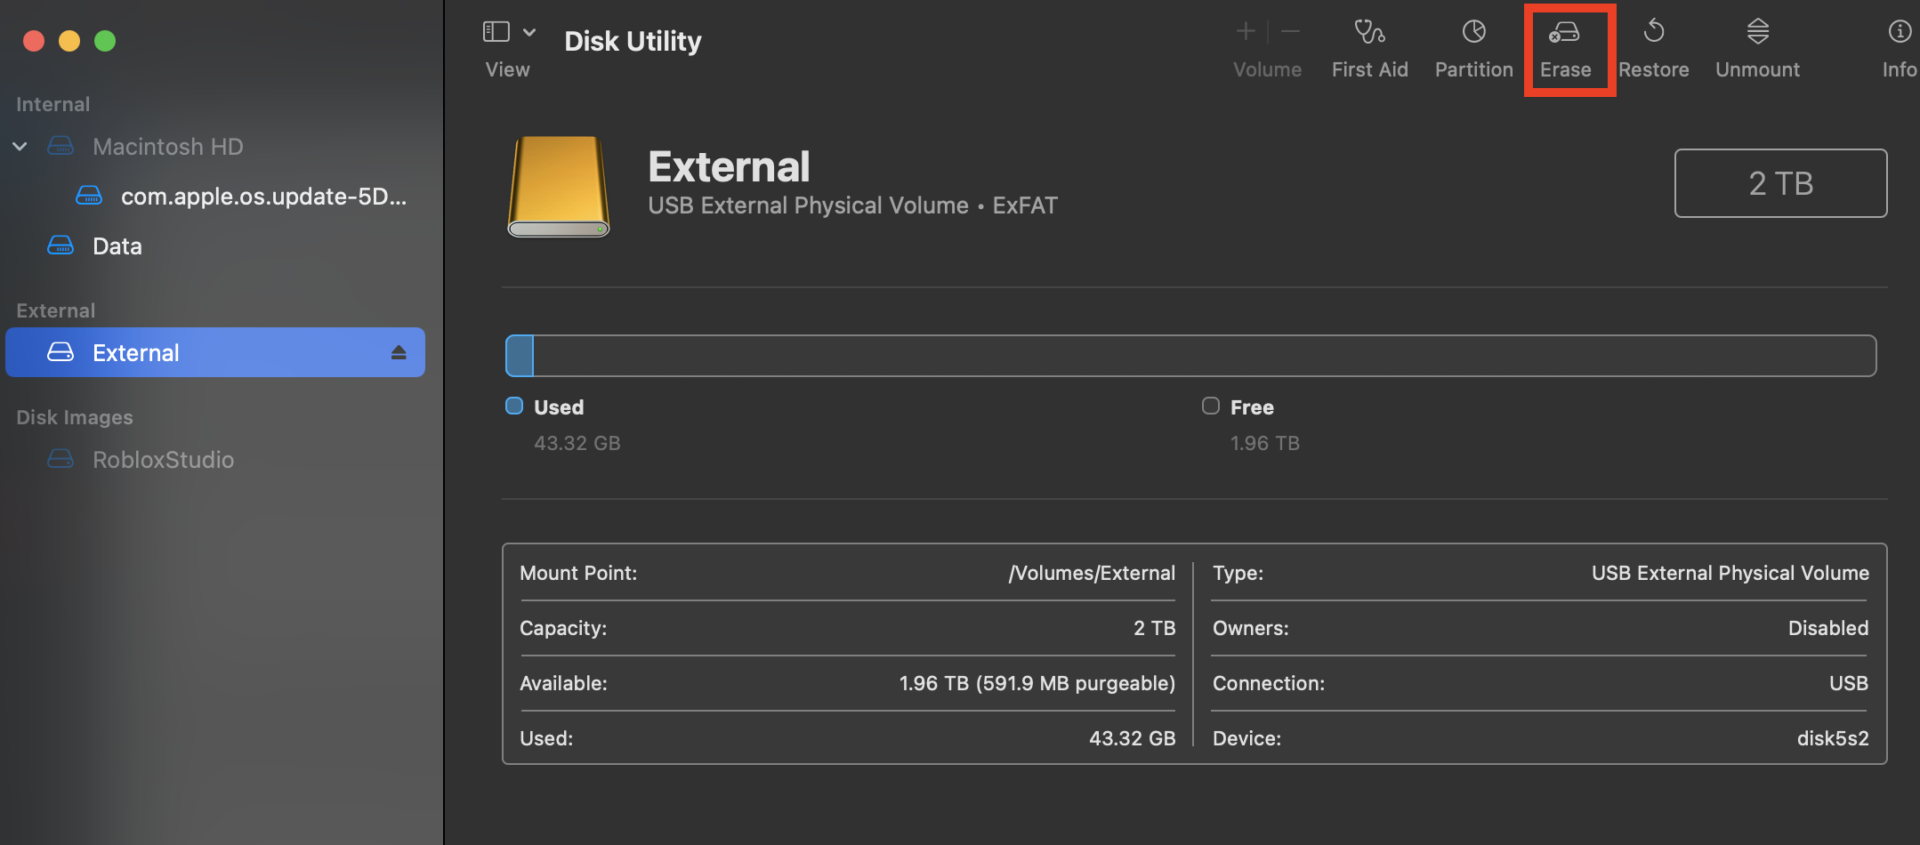 Erasing external drive in Disk Utility - macOS